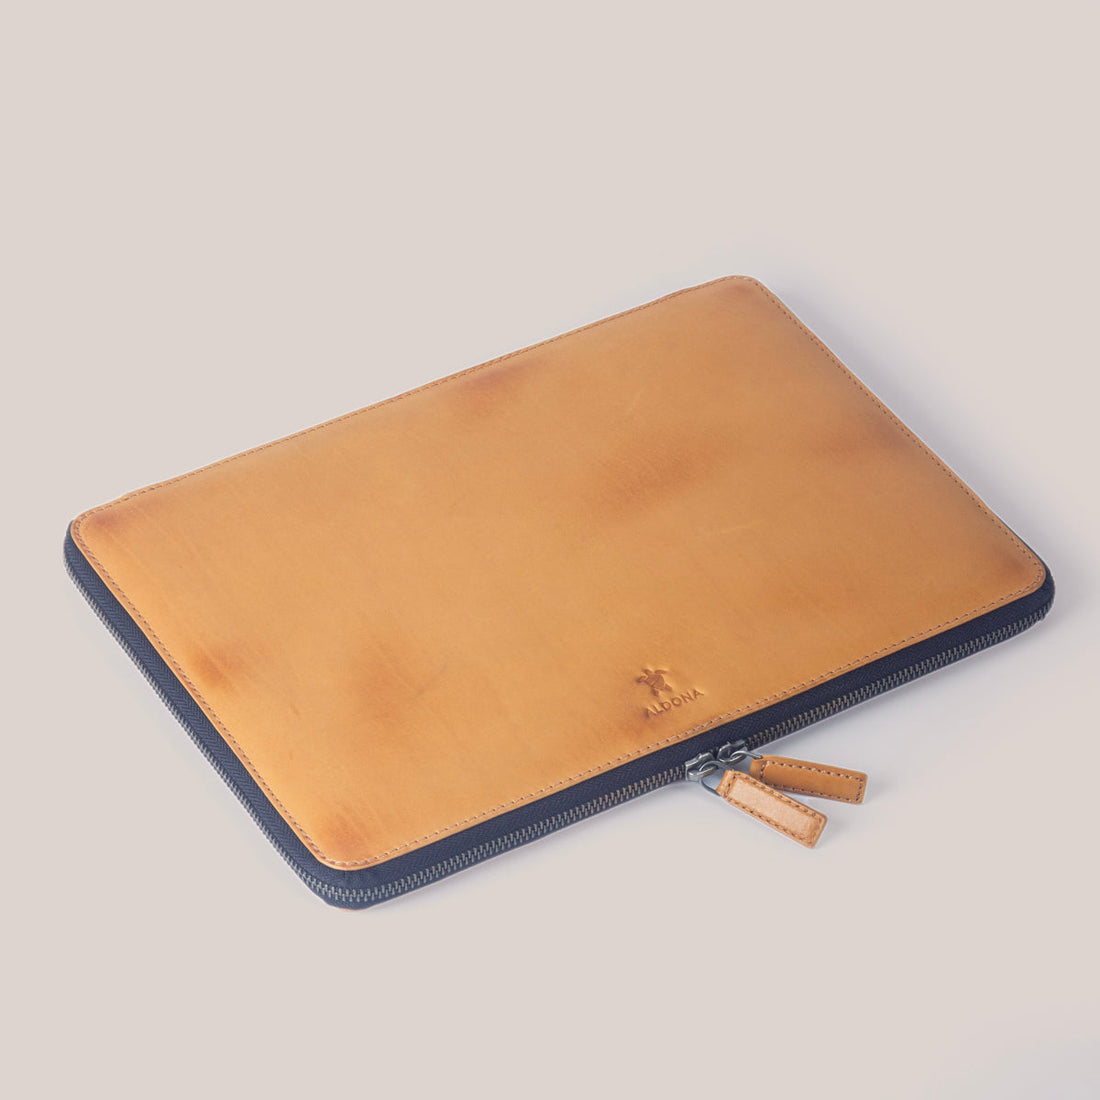 MacBook Pro 13 Zippered Laptop Case - Onyx Black